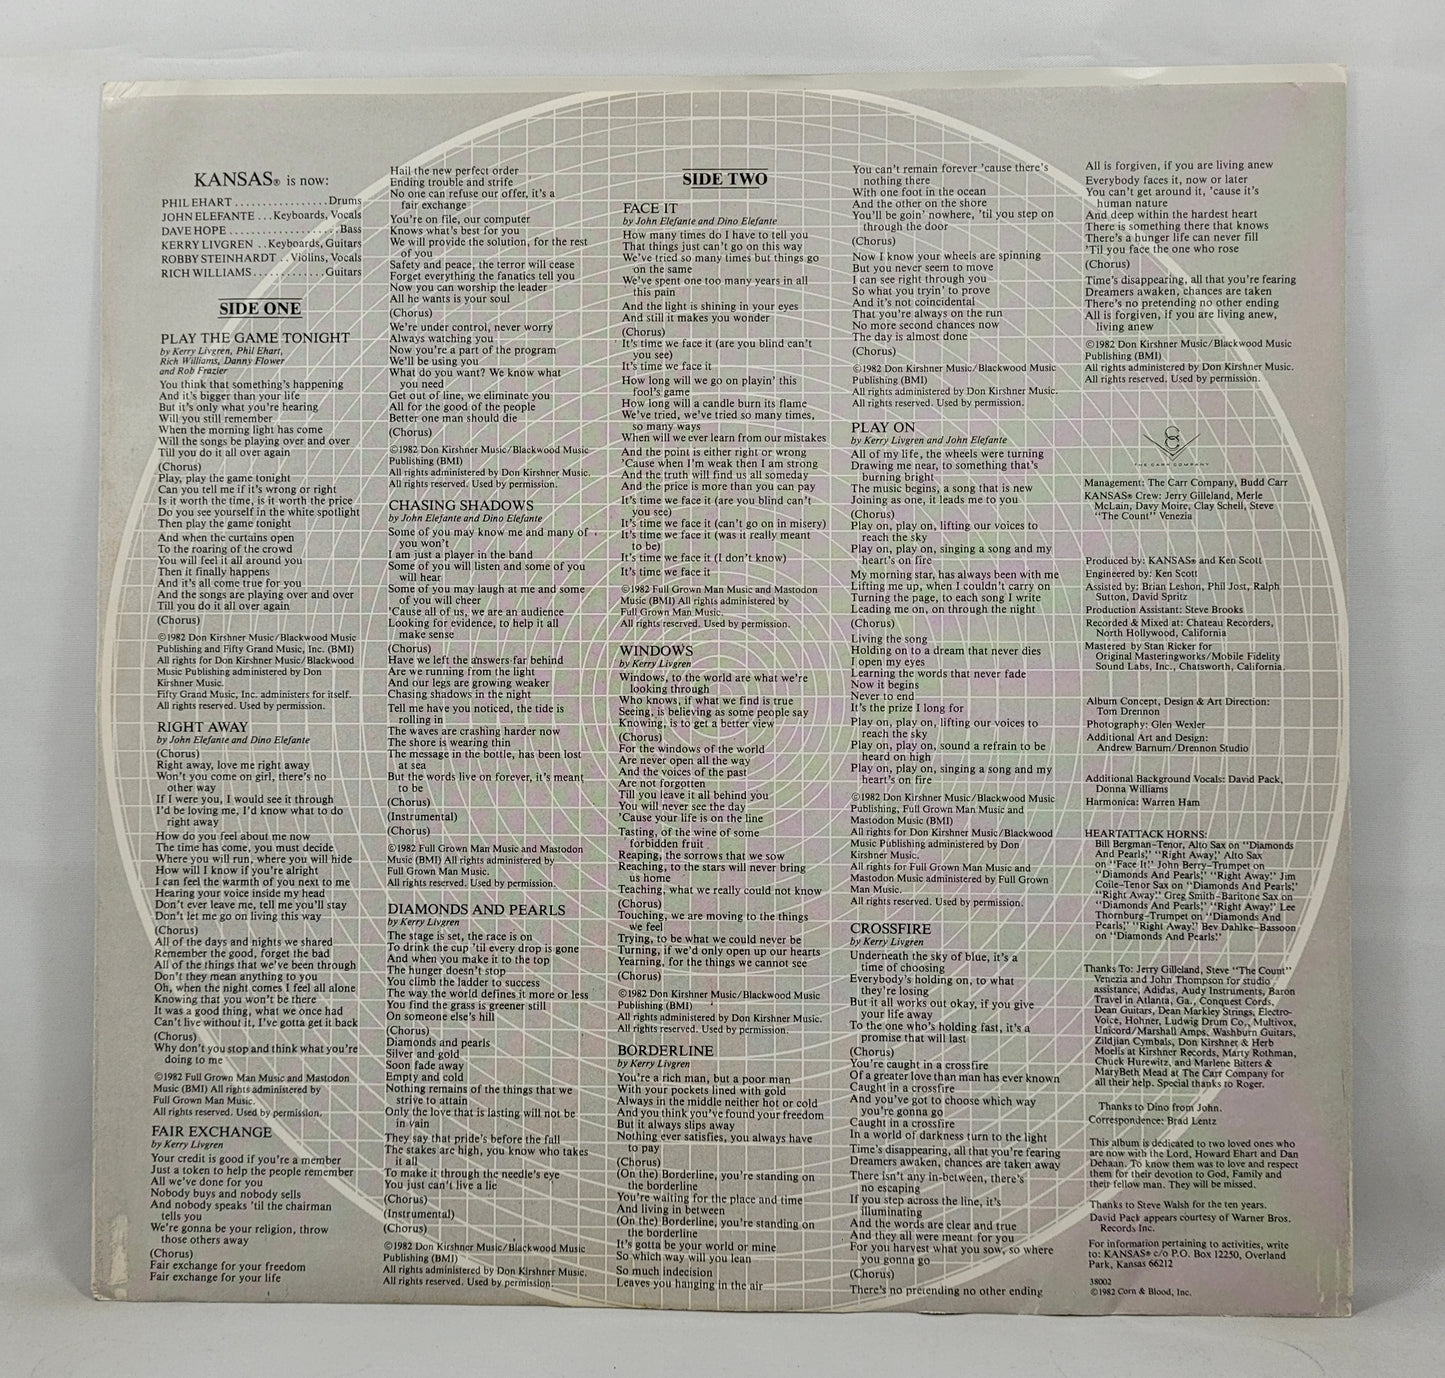 Kansas - Vinyl Confessions [1982 Carrollton Pressing] [Used Vinyl Record LP] [C]